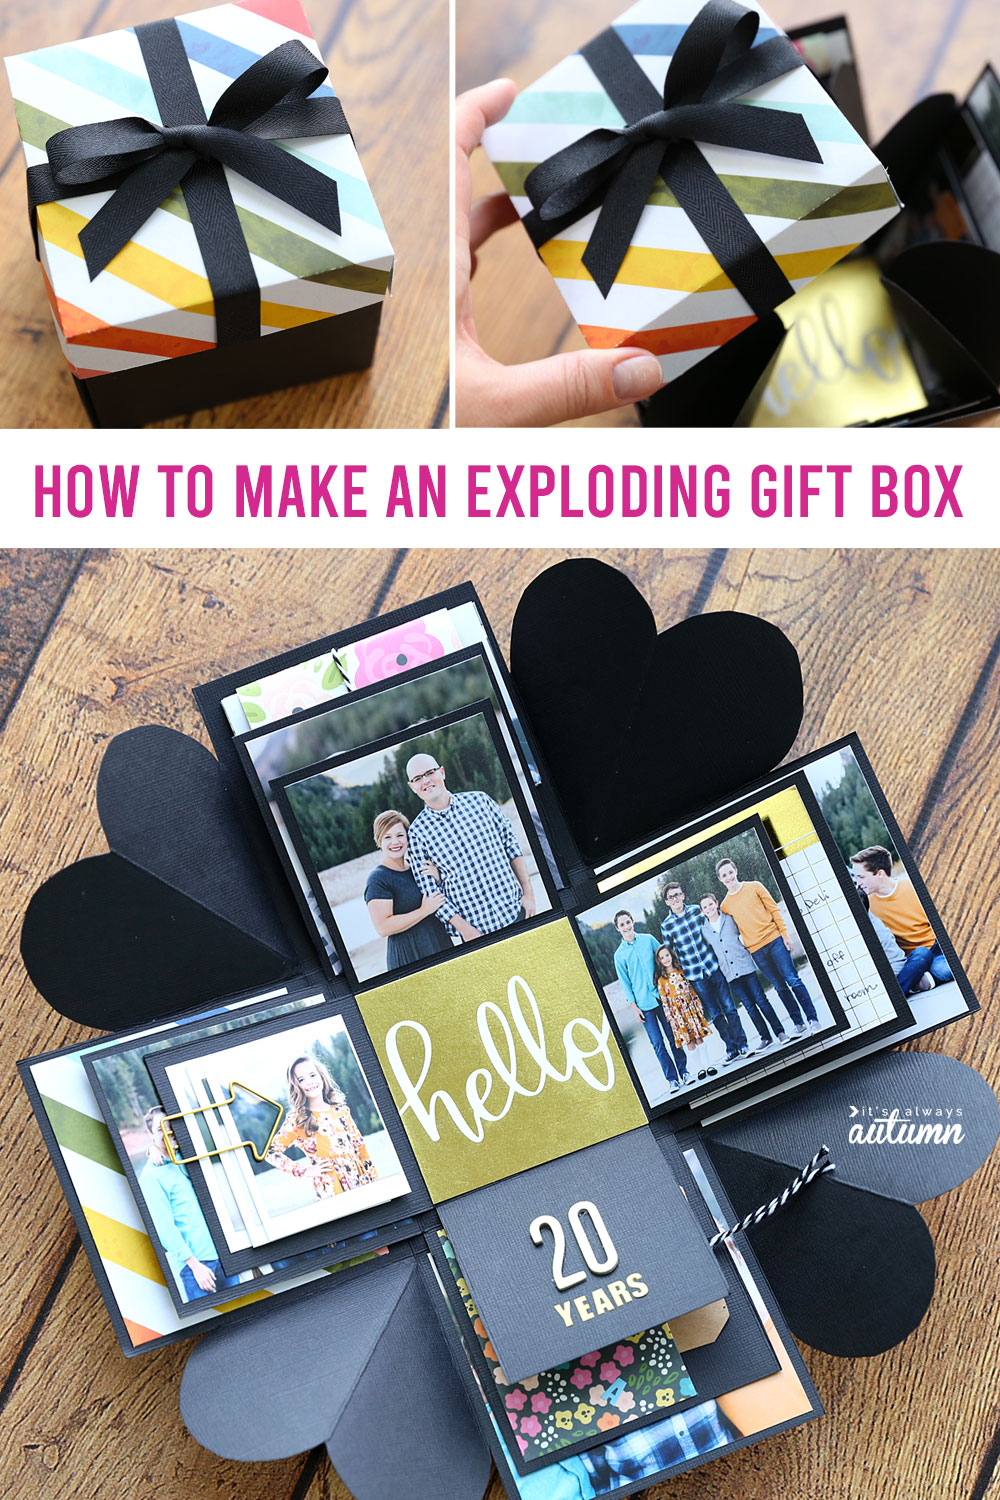 Photo Box Gift DIY